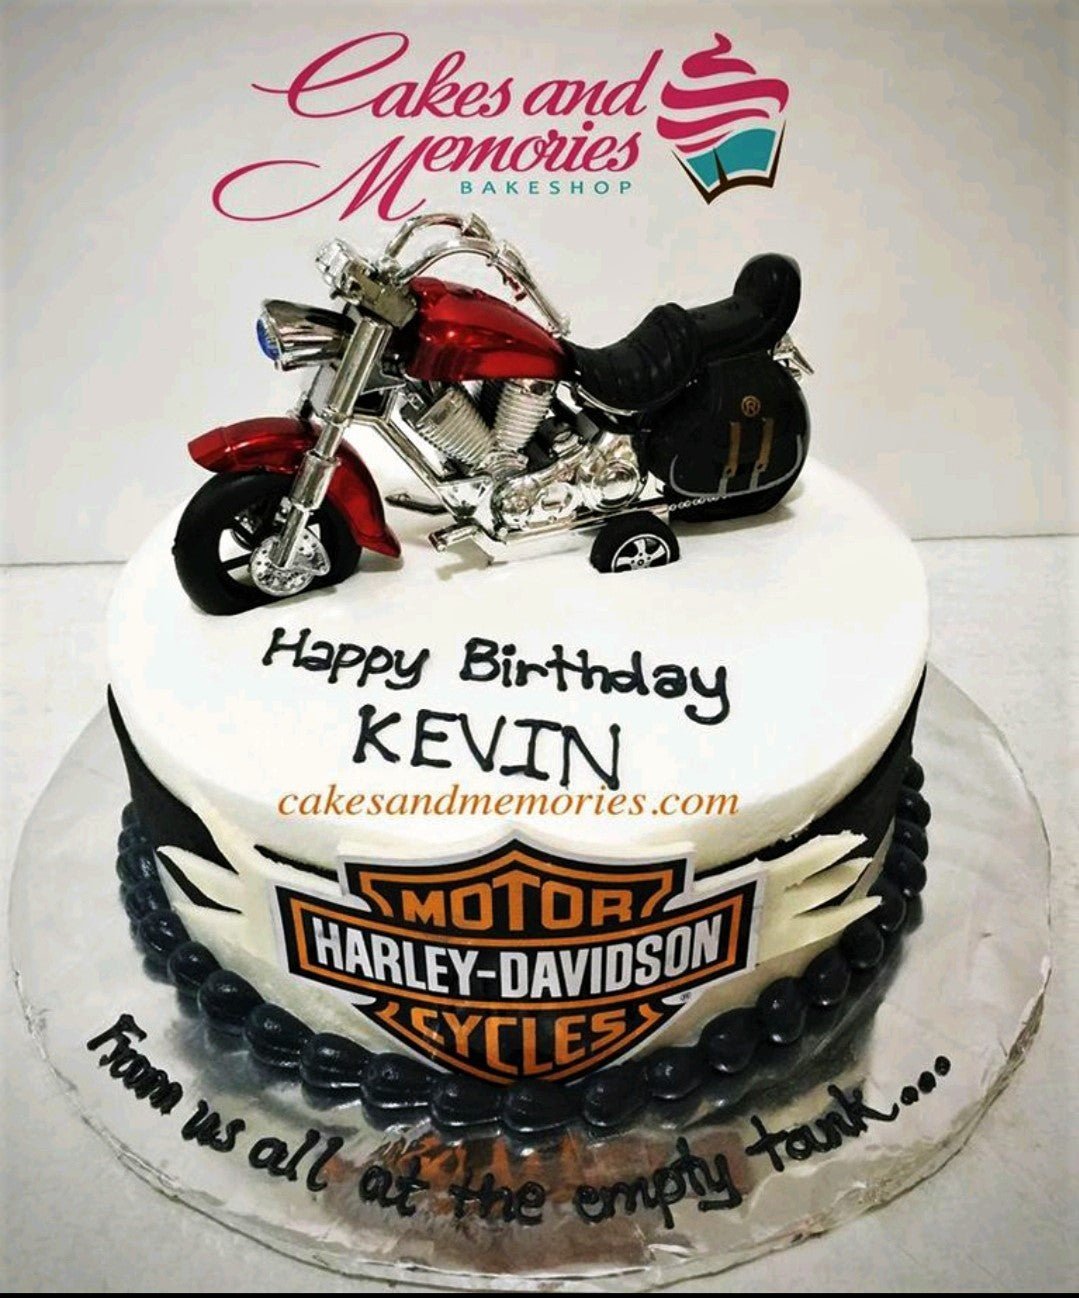 3D lying down Harley Davidson Motorbike shaped cake | Flickr